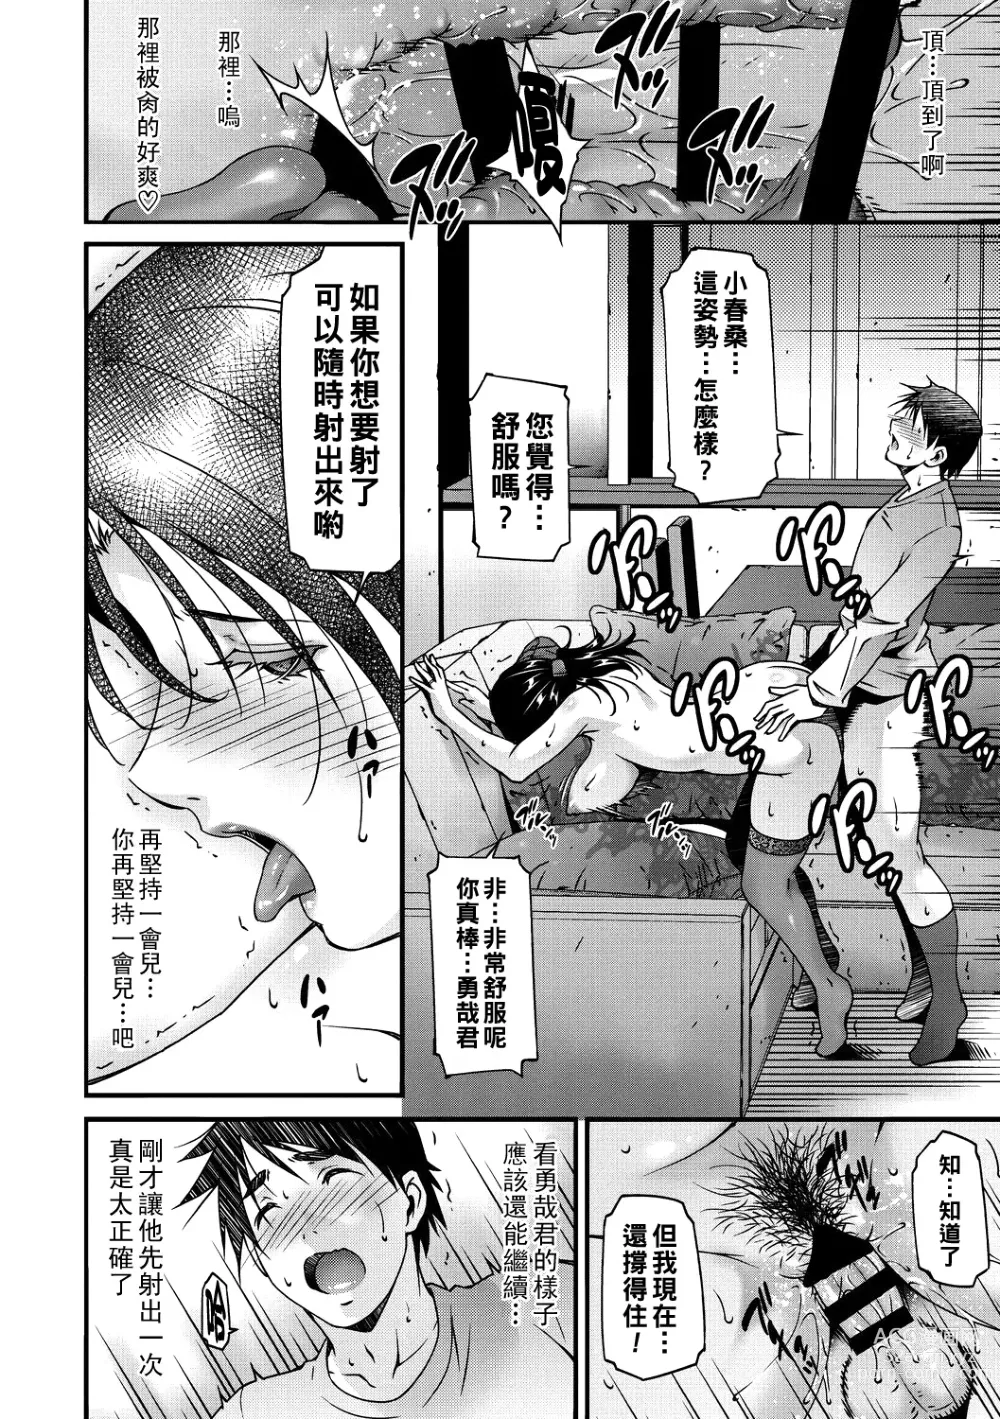 Page 16 of manga Jukubo no Enjou